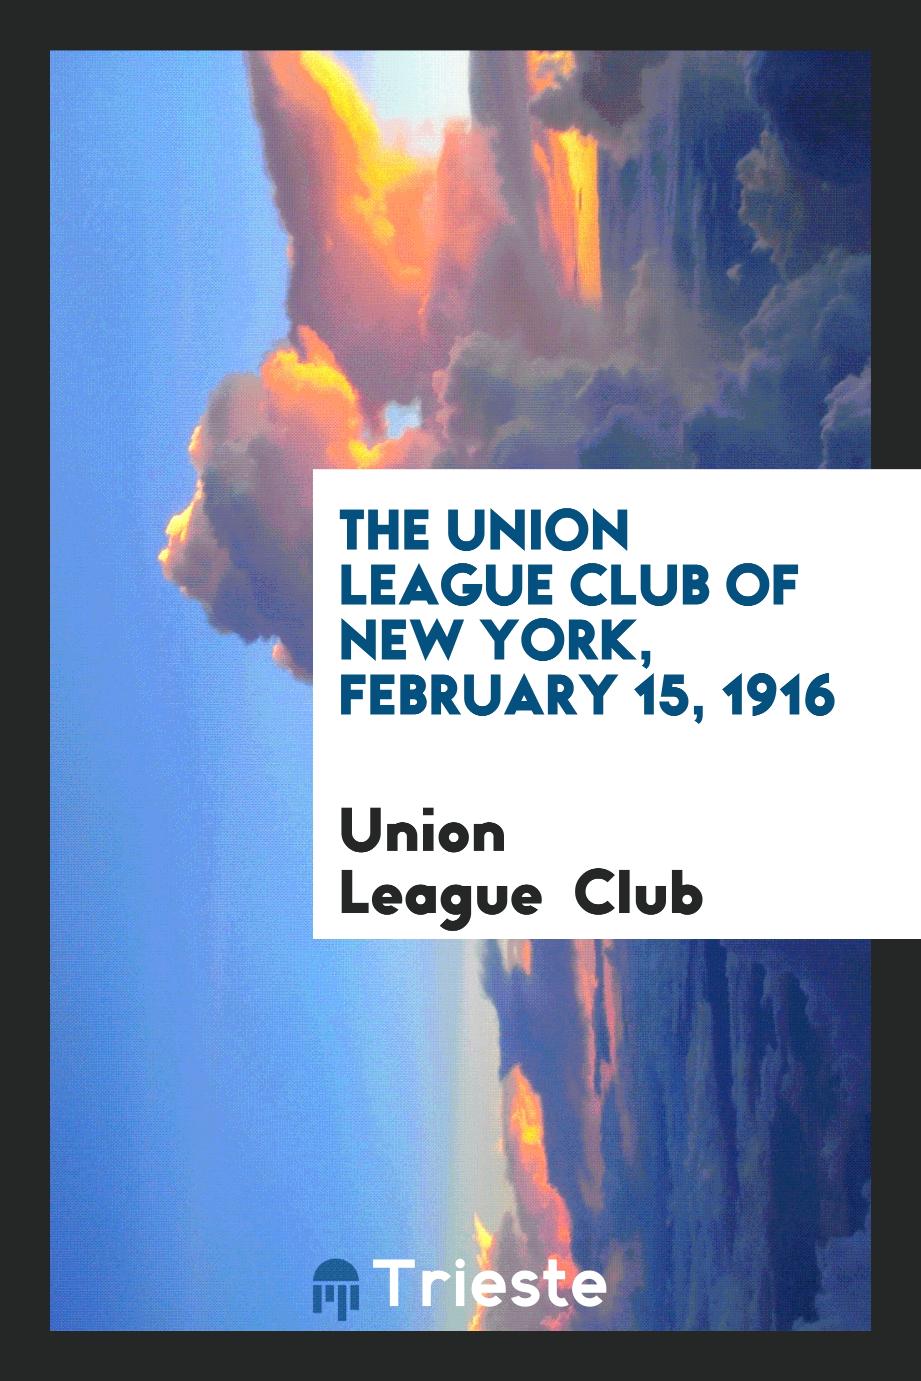 The Union League Club of New York, February 15, 1916